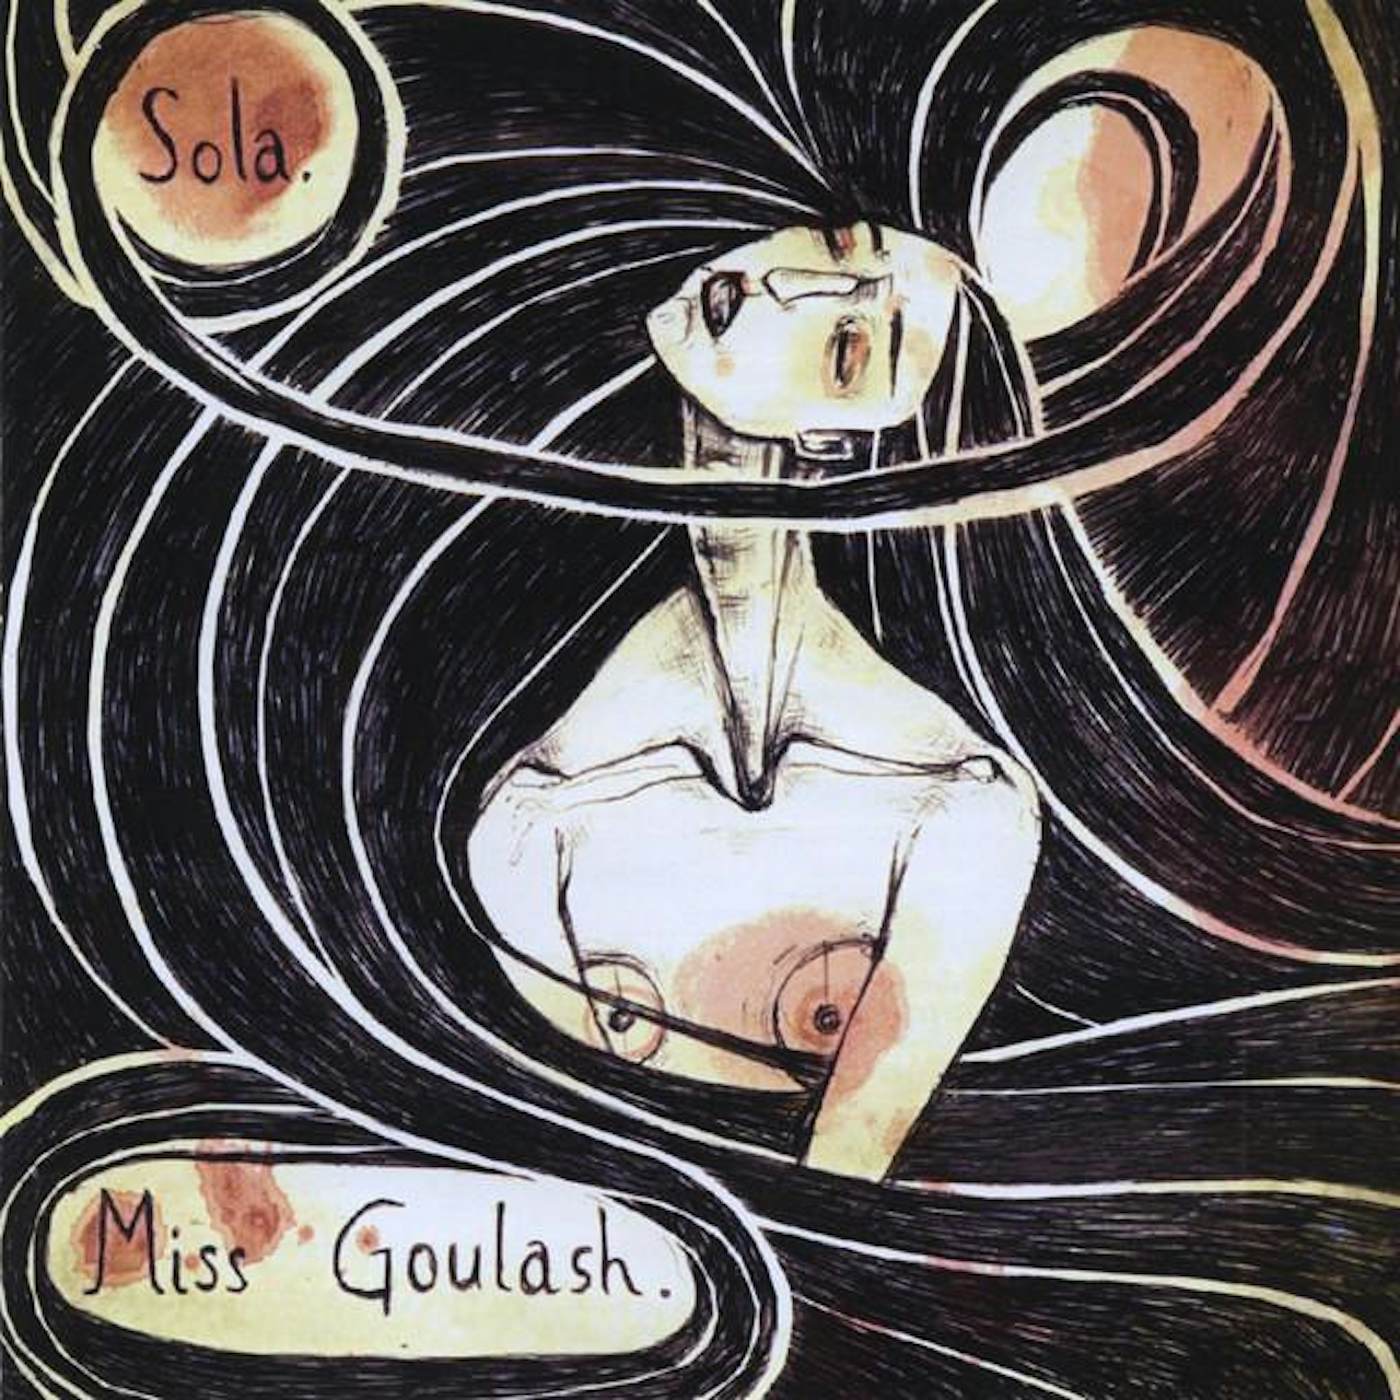 Miss Goulash